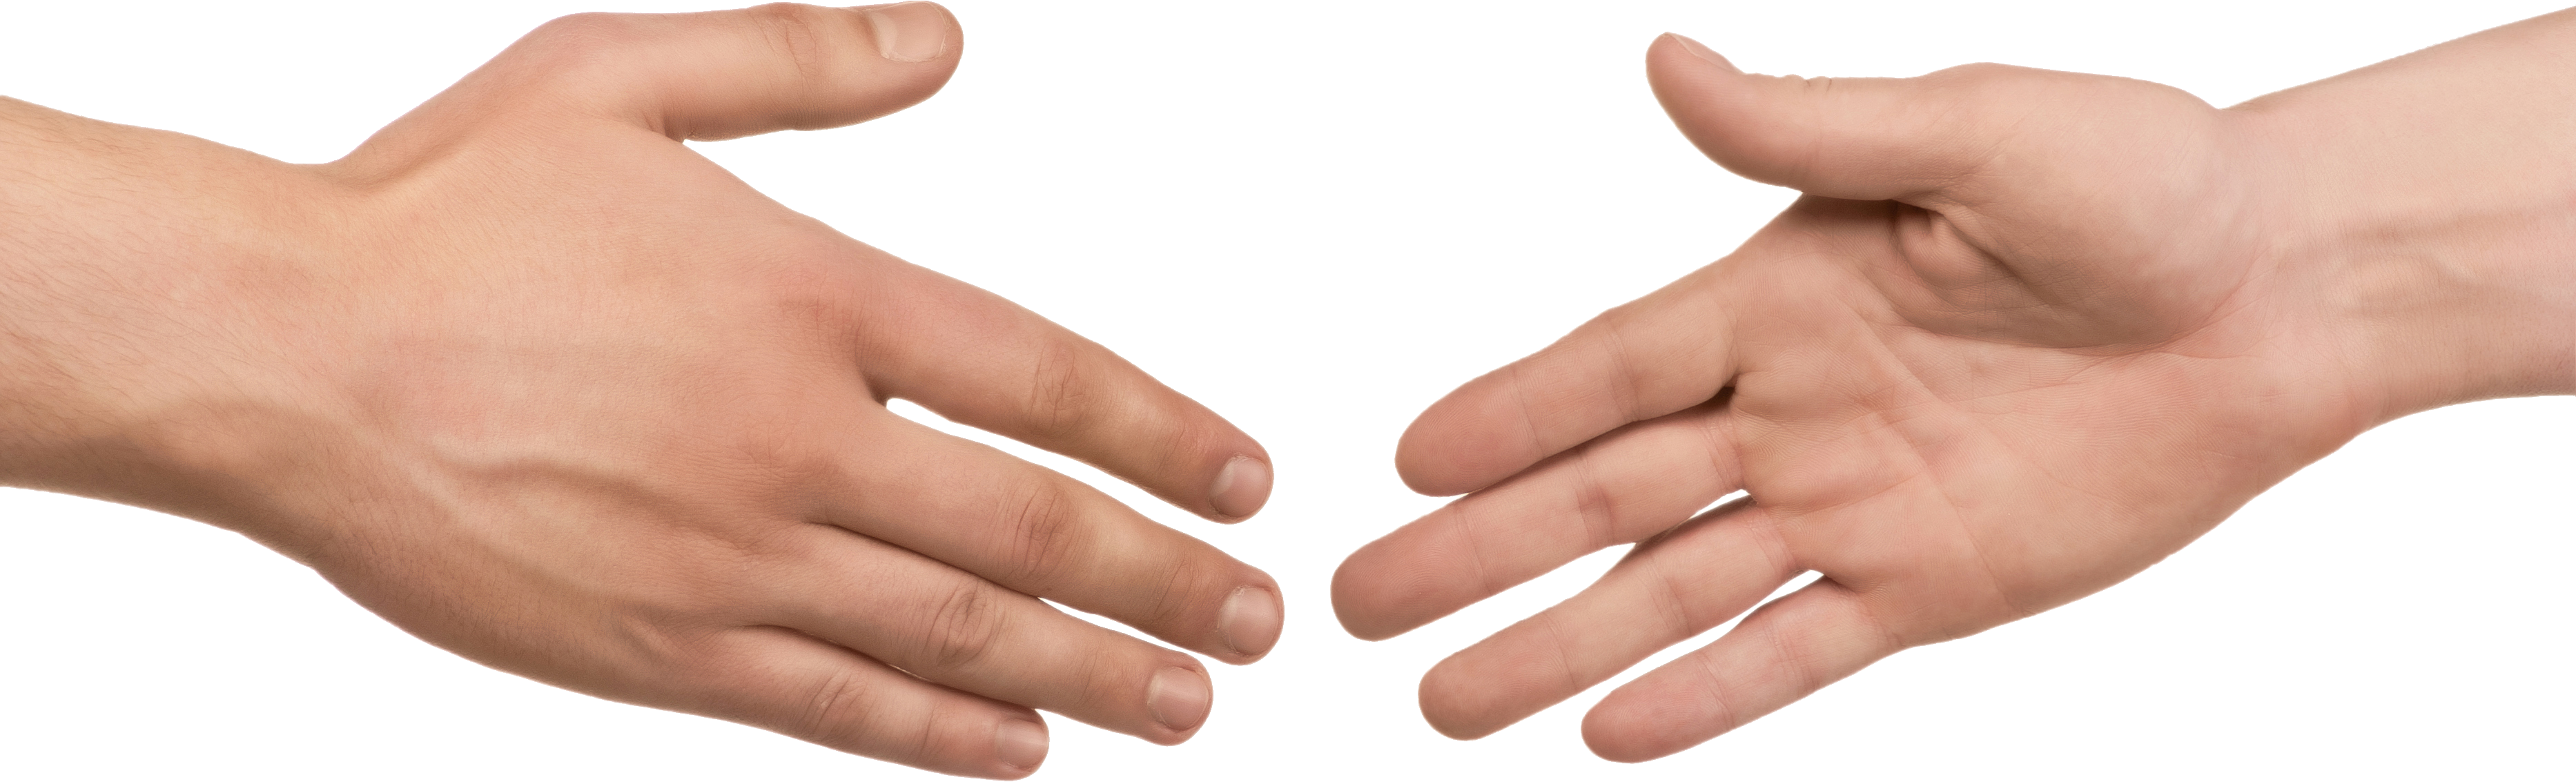 Handshake Png, Hands Image, Free Download - Hands, Transparent background PNG HD thumbnail